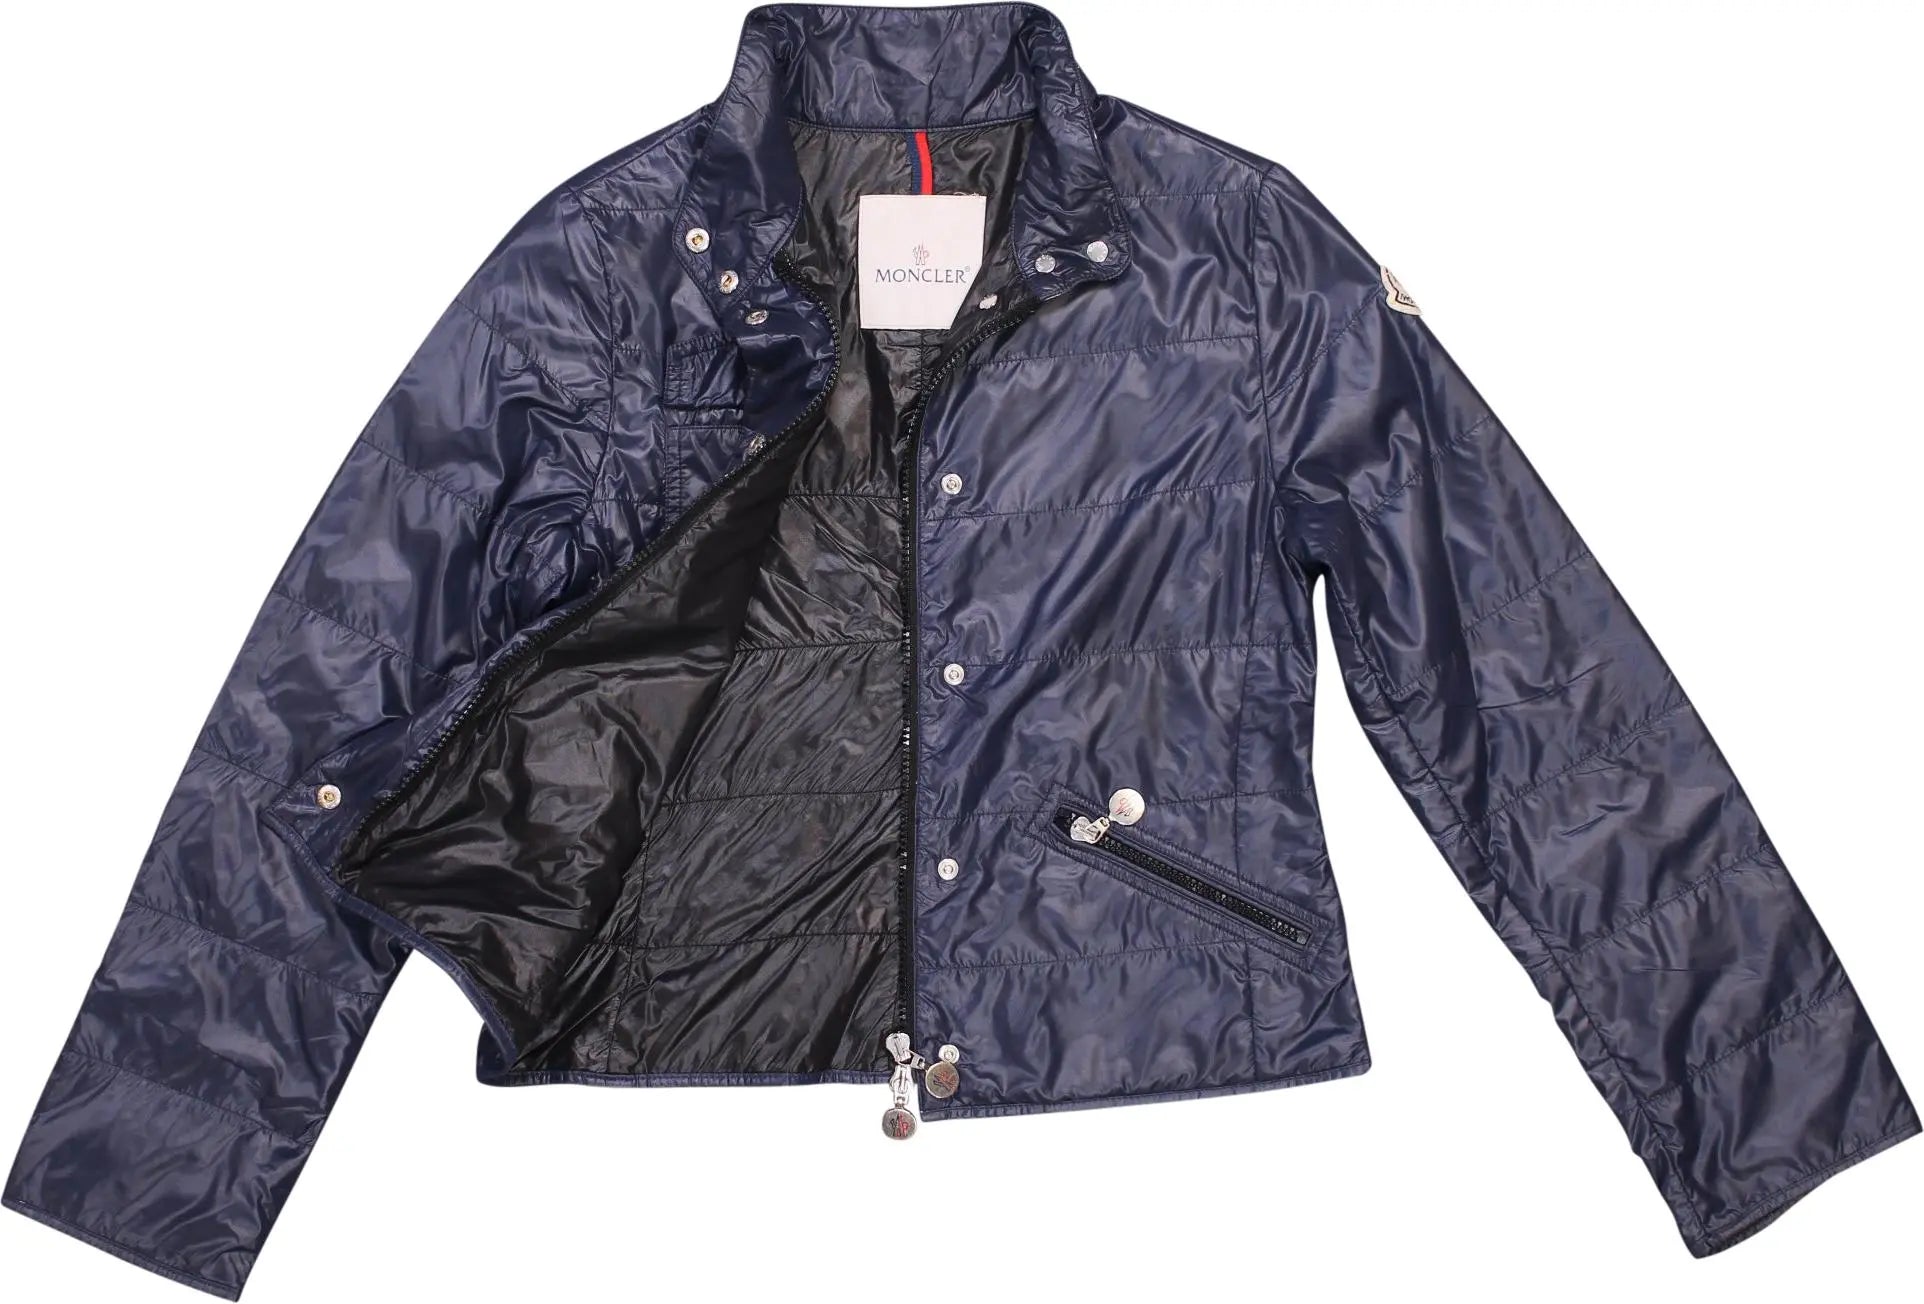 Moncler - Blue Moncler Jacket- ThriftTale.com - Vintage and second handclothing